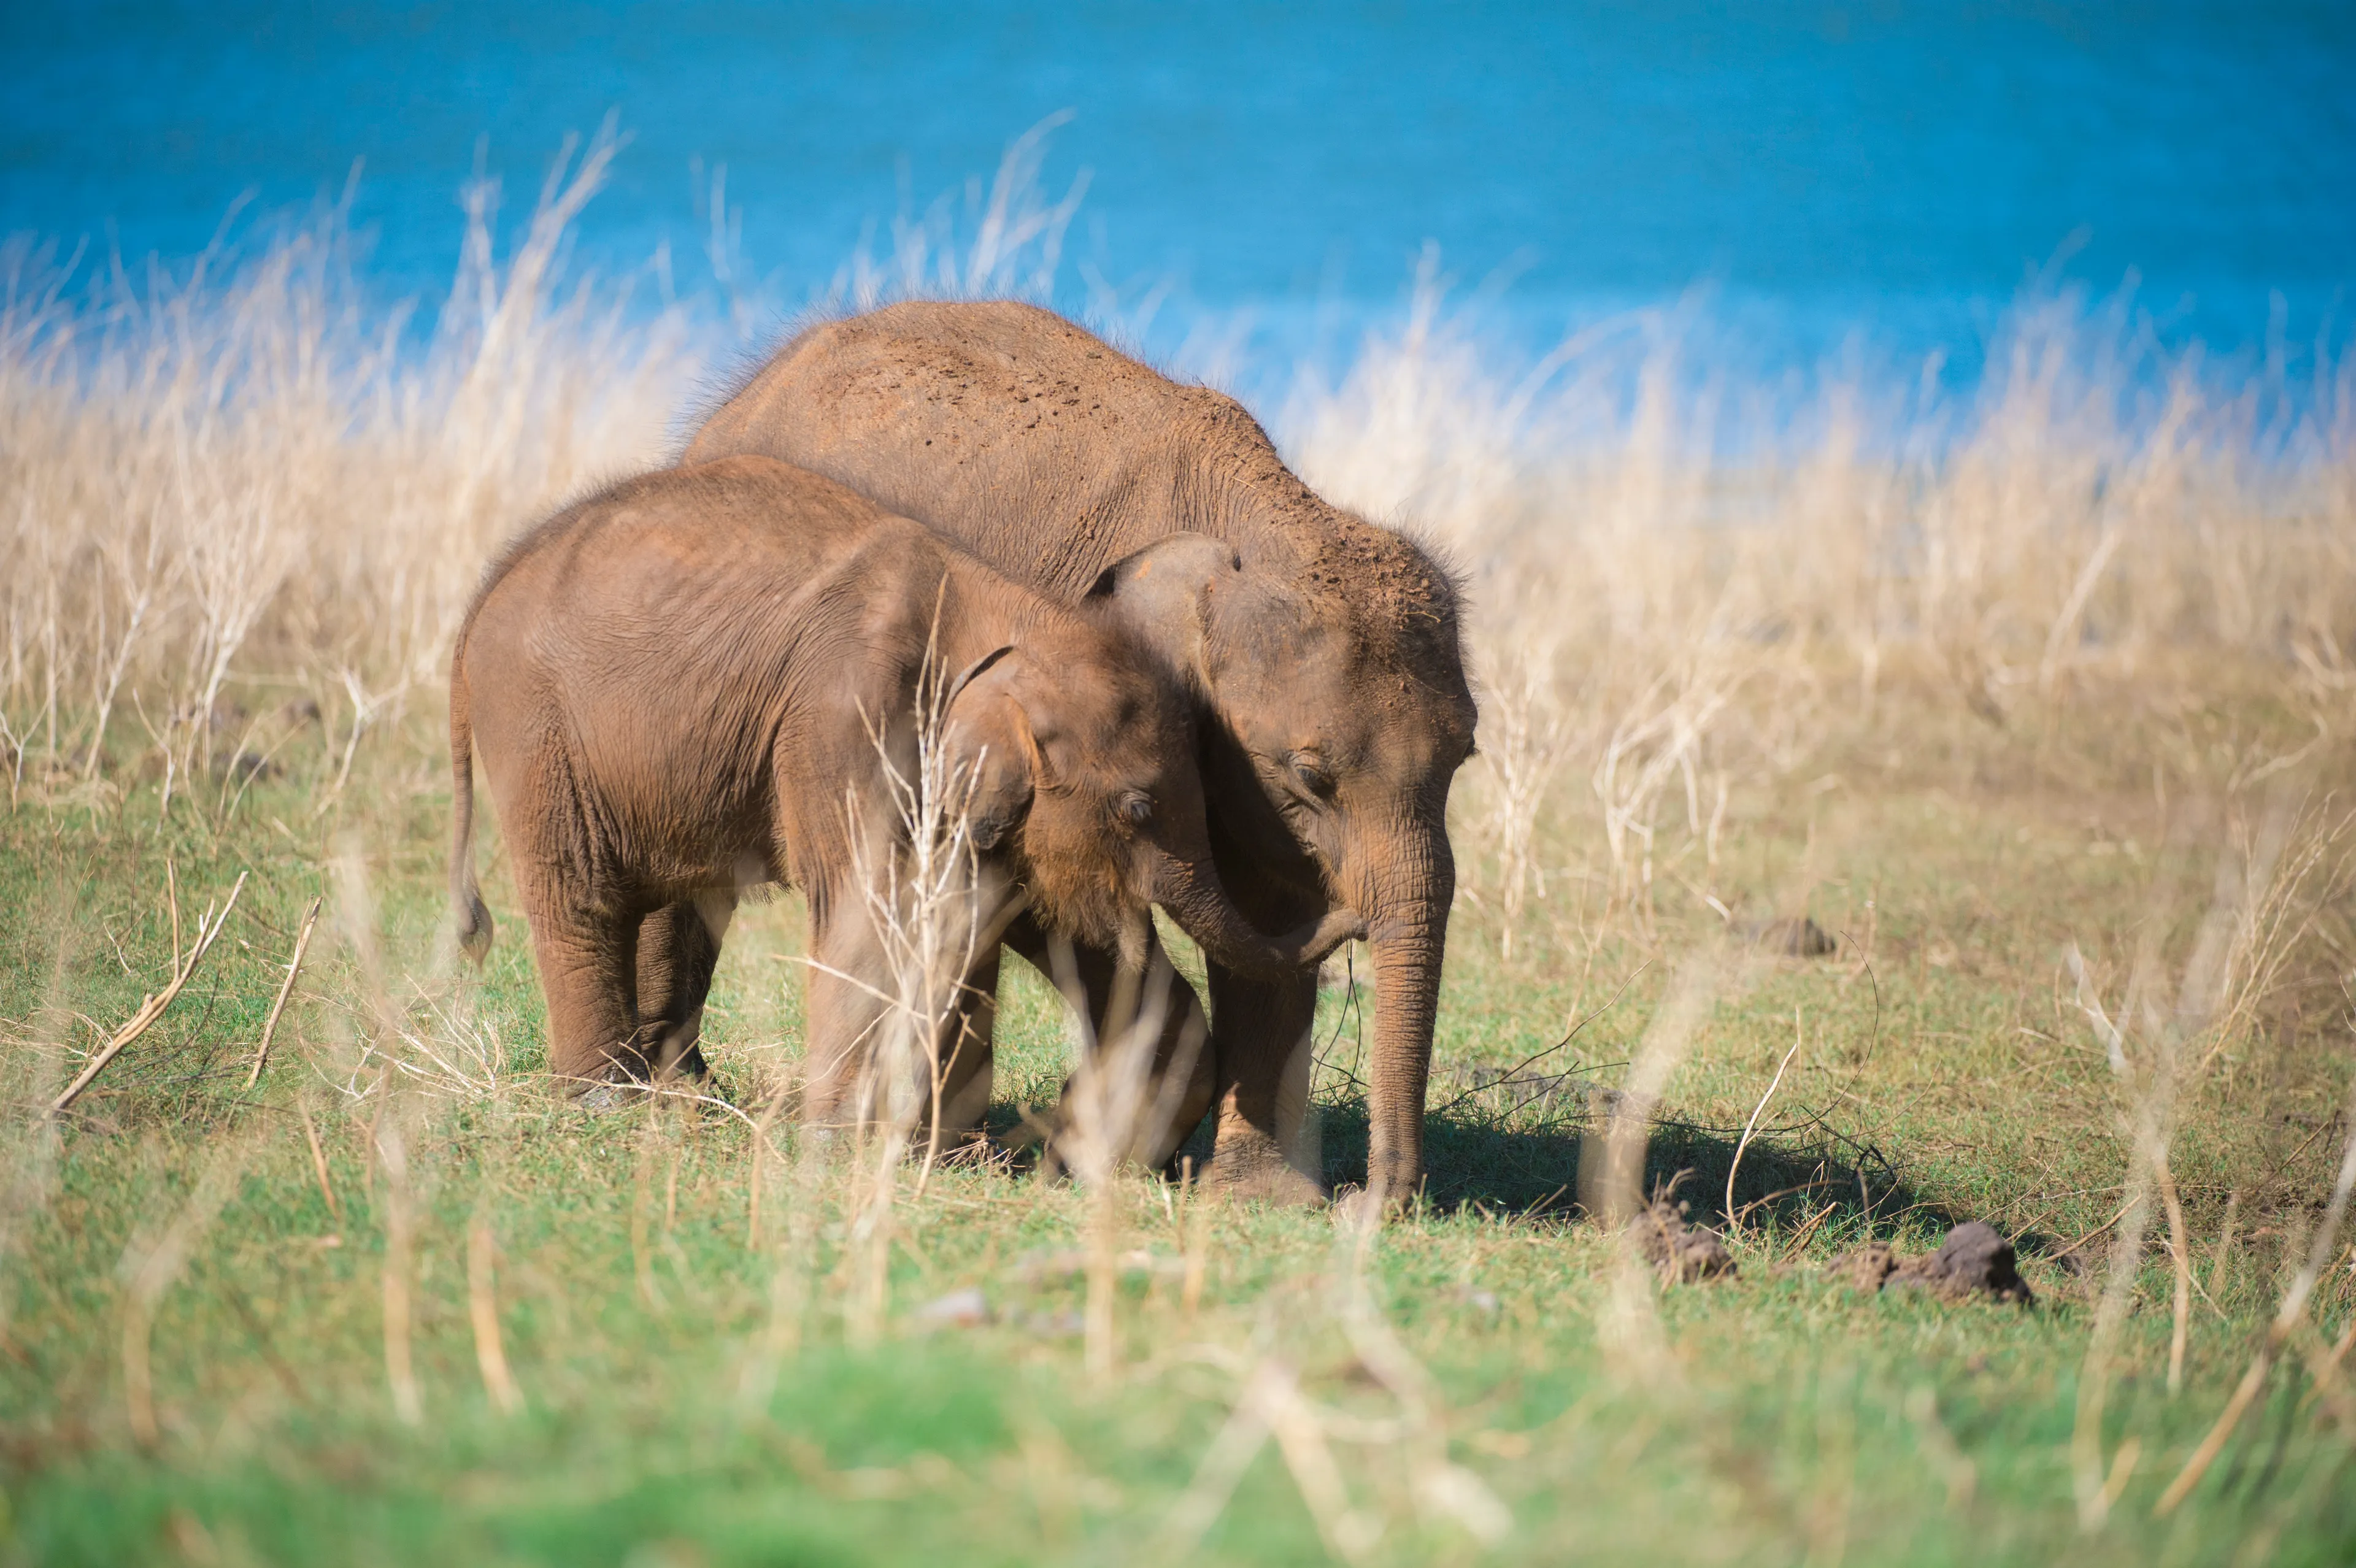 Mom and son elephant at Uda Walawe National Park